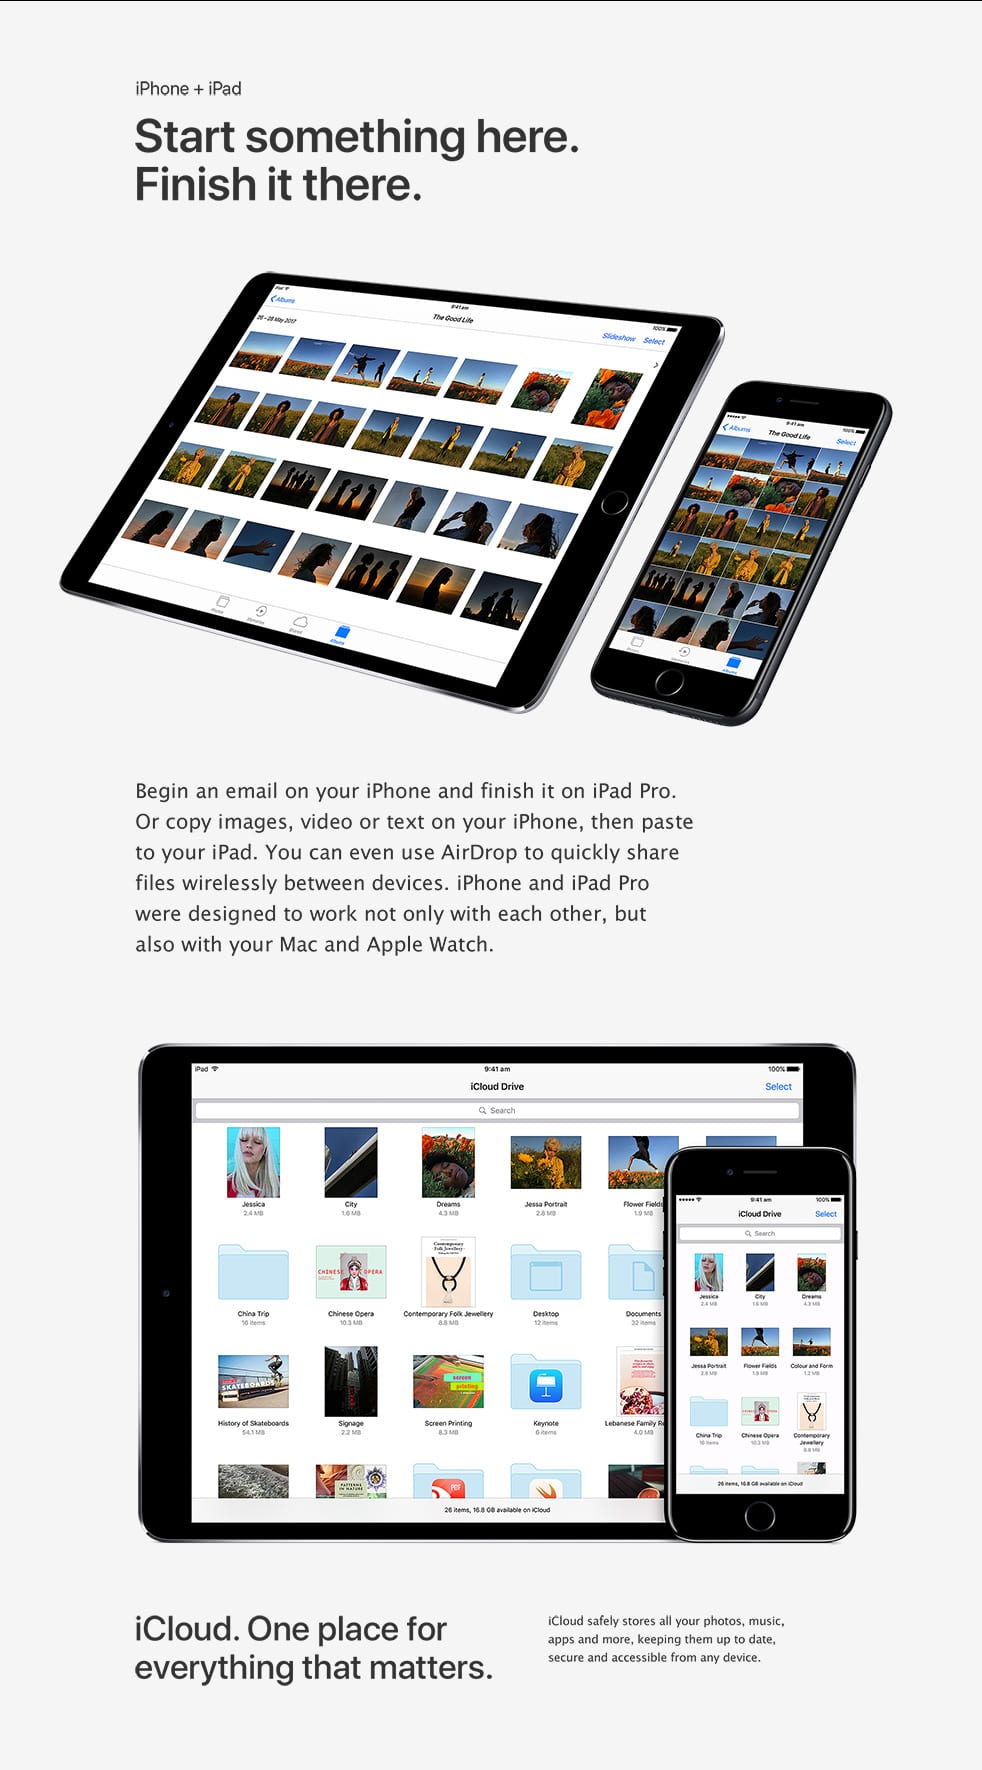 iPad Pro - iPhone + iPad. Start something here. Finish it there.